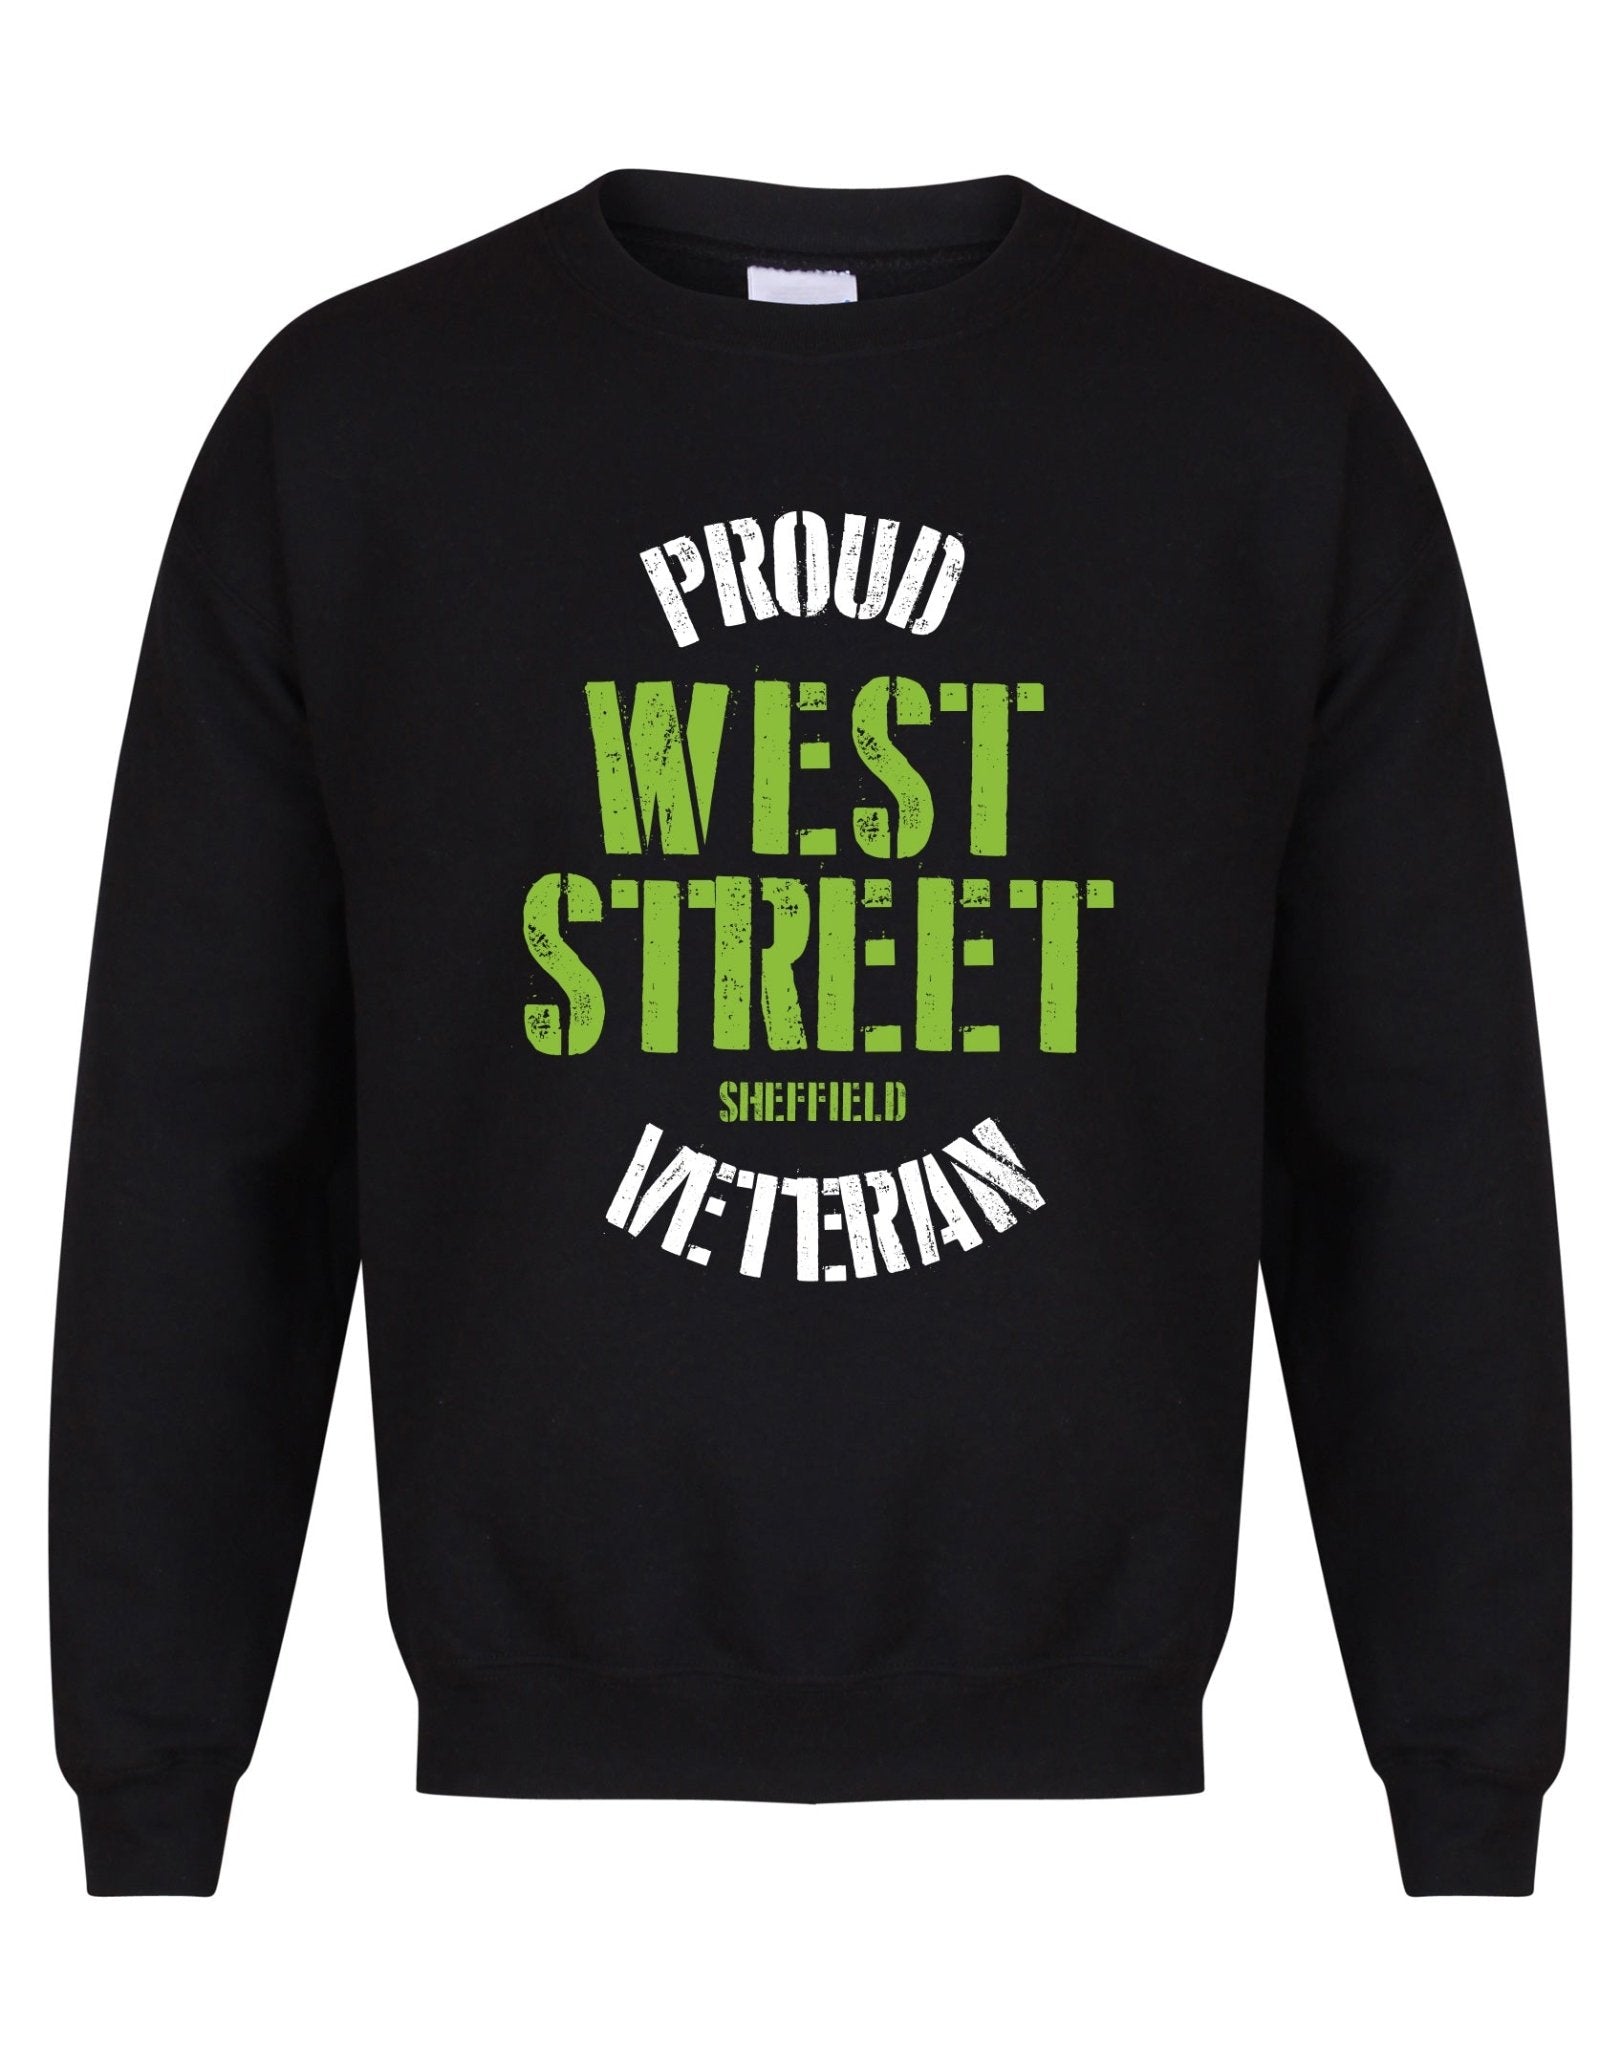 West Street Veteran unisex fit sweatshirt - various colours - Dirty Stop Outs